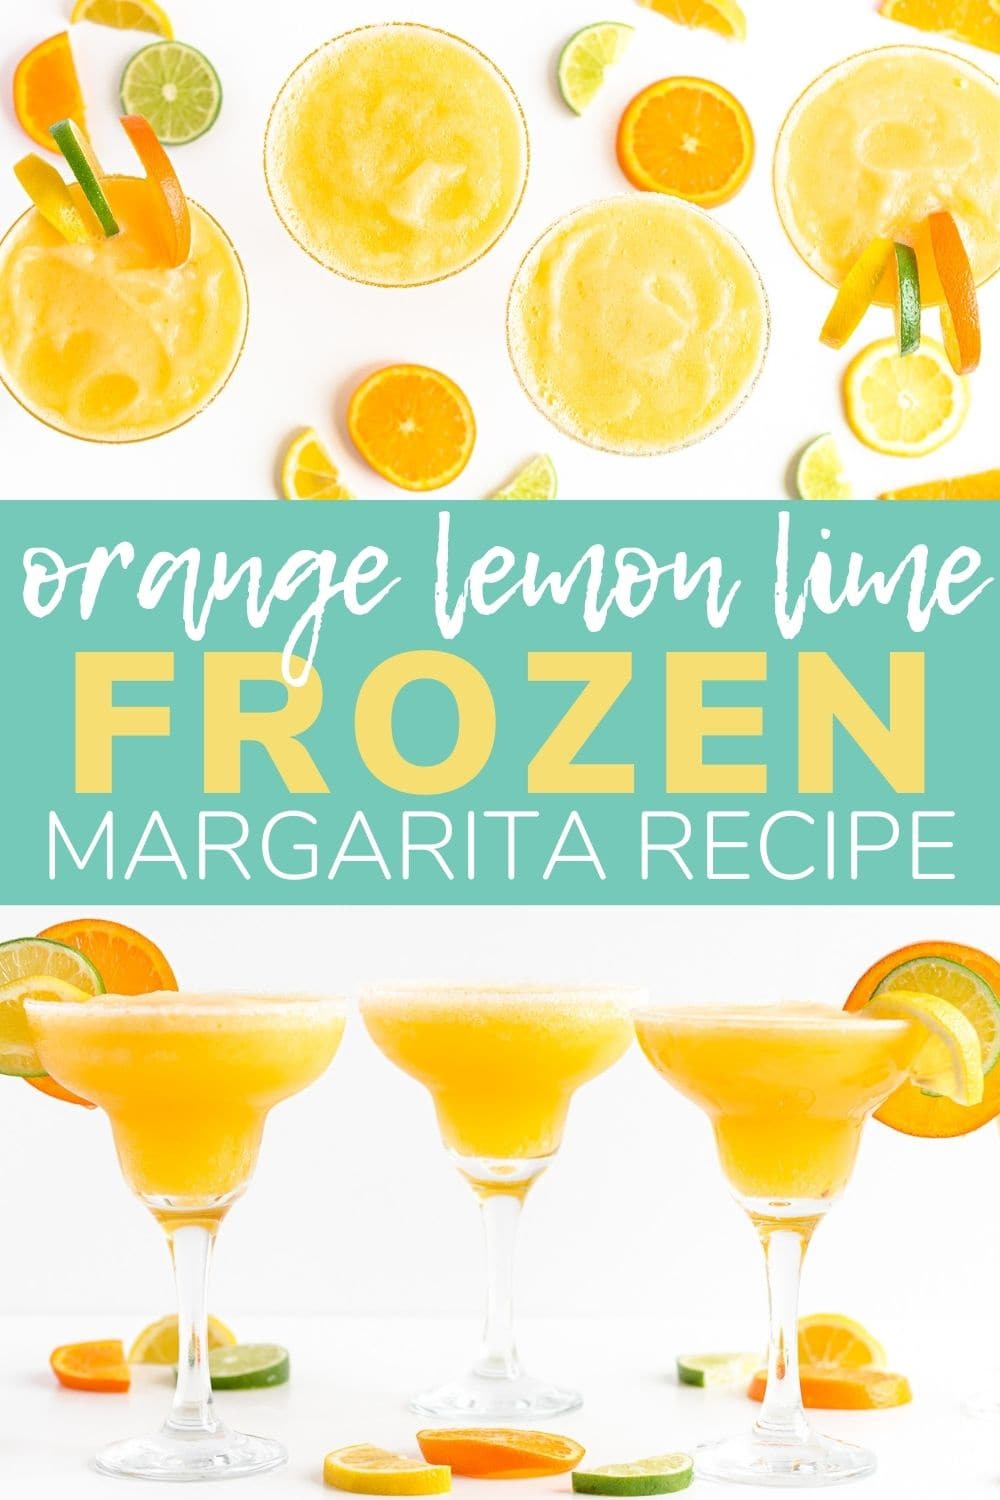 Collage of citrus margaritas with text overlay "Orange Lemon Lime Frozen Margarita Recipe"